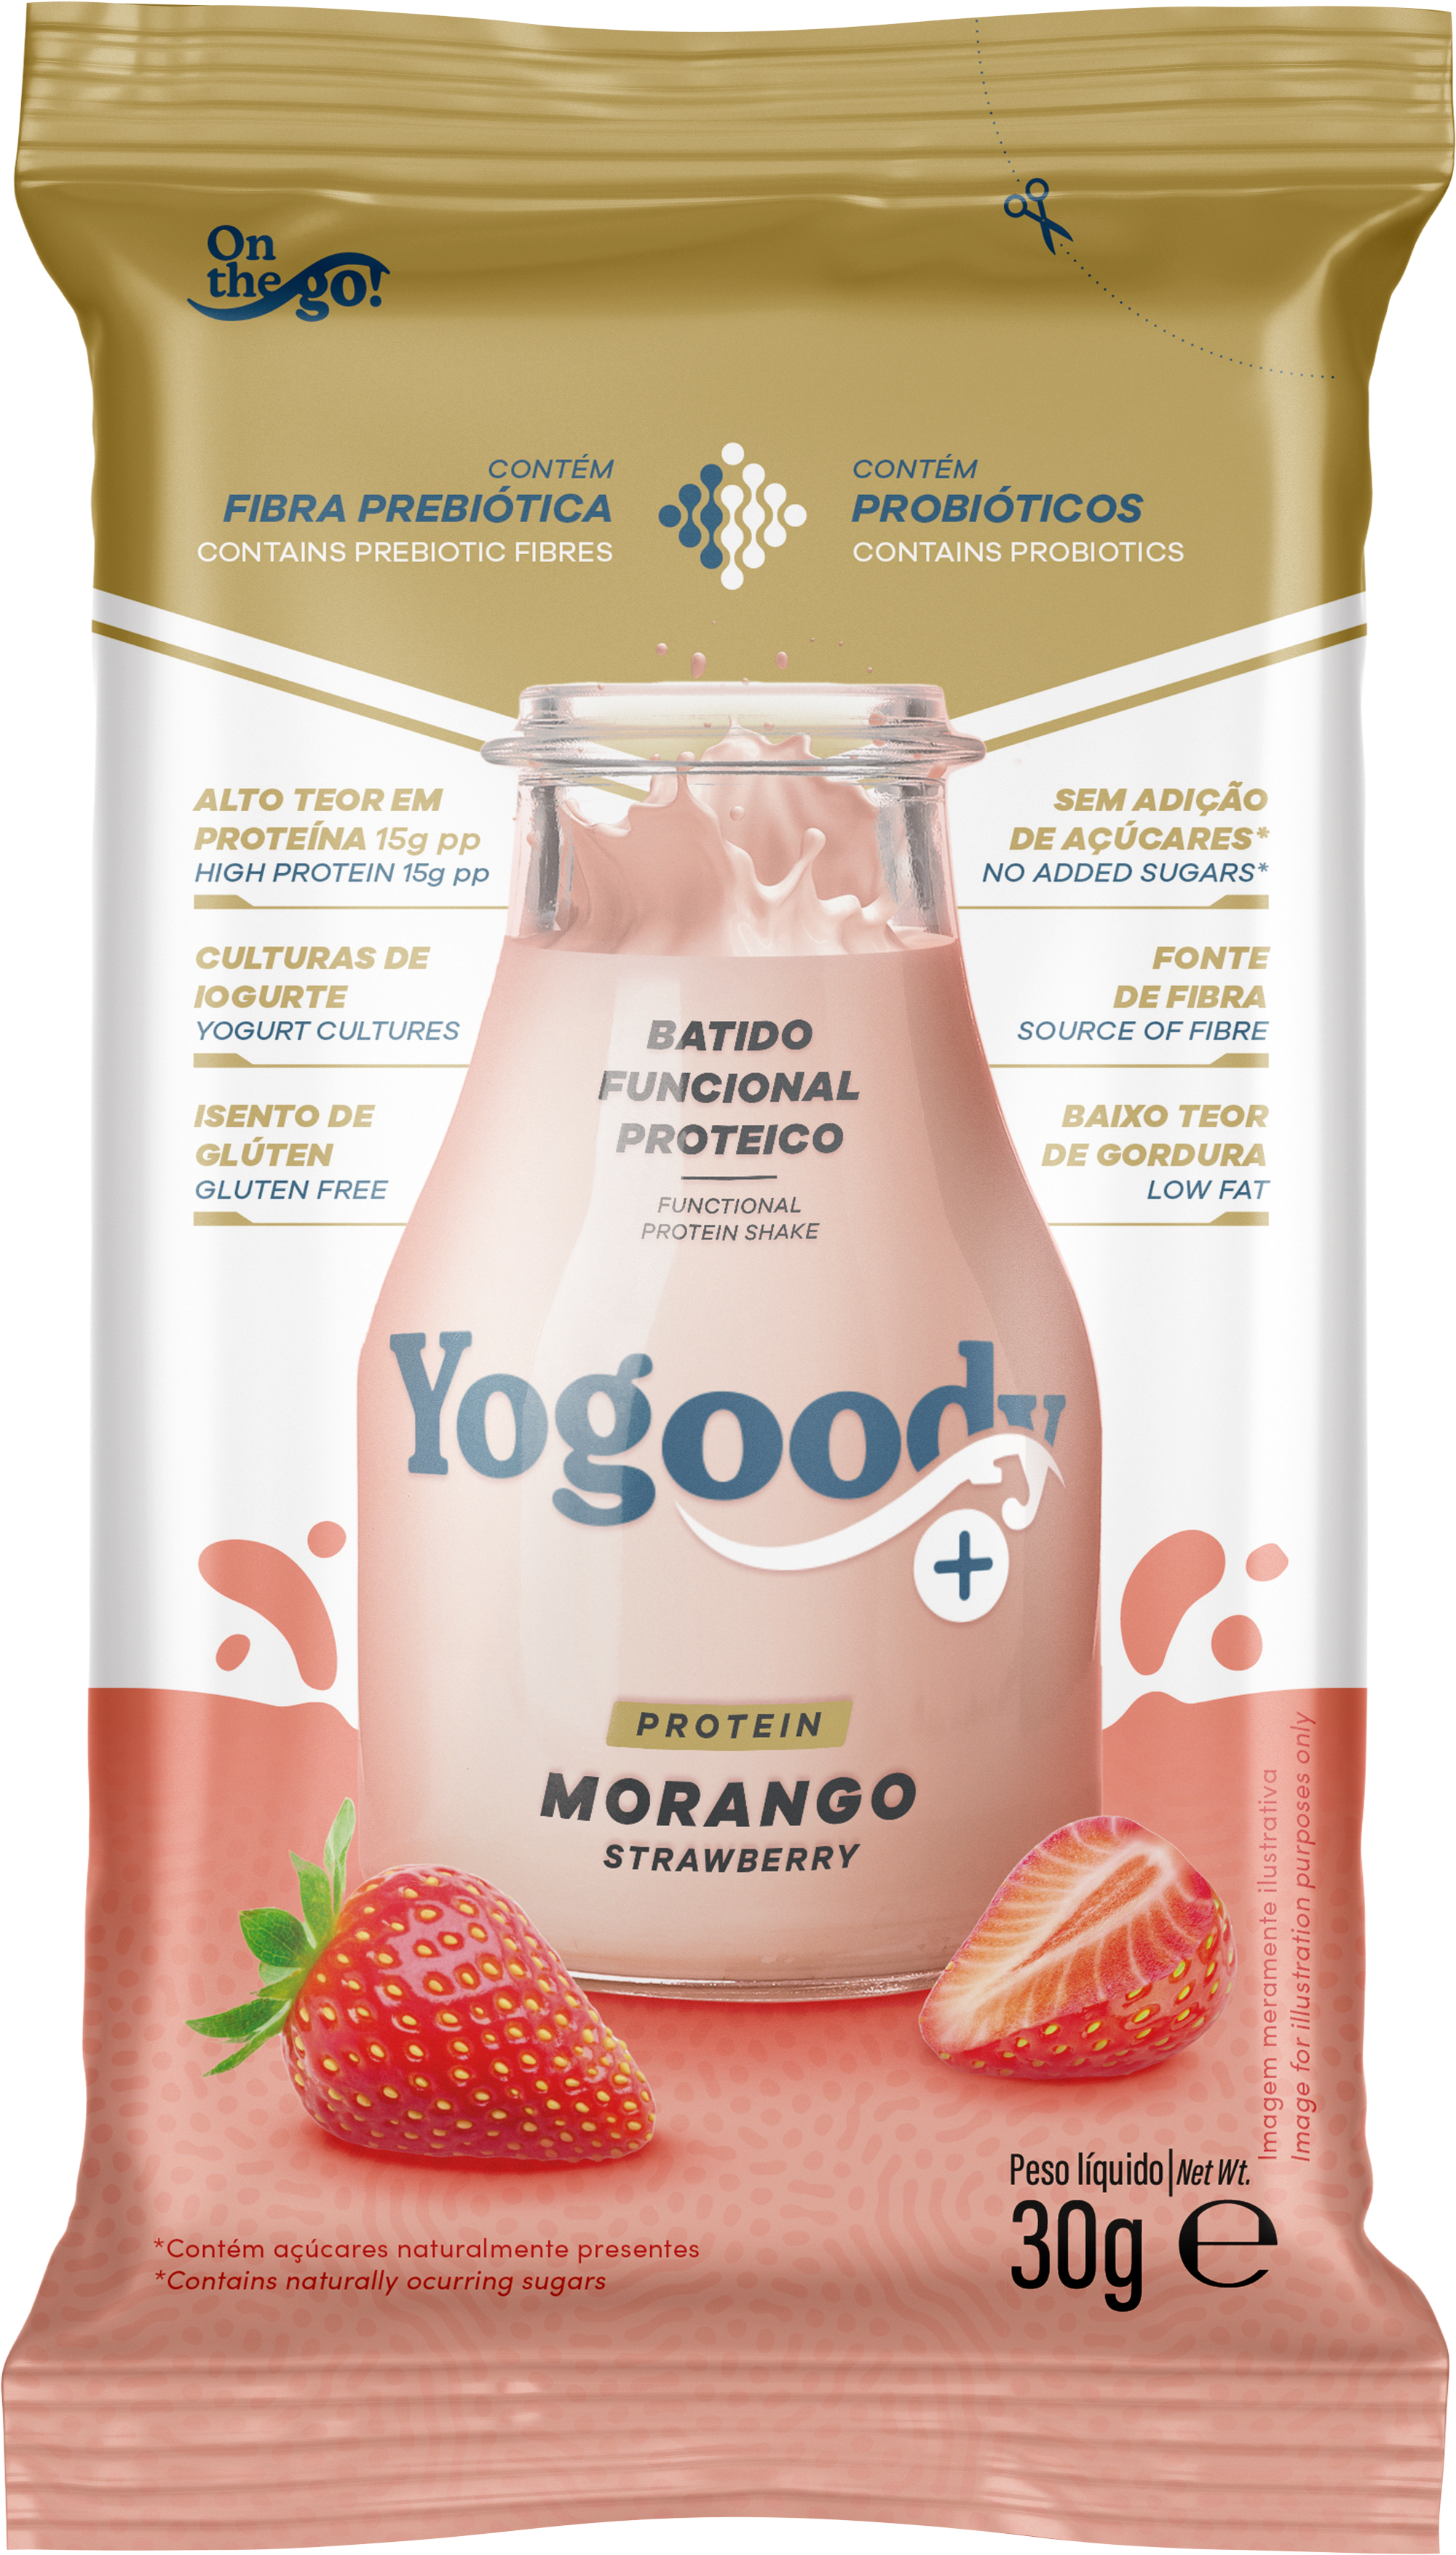 Yogoody+ Protein Strawberry Flavoured Shake - 3 x 30g sachets